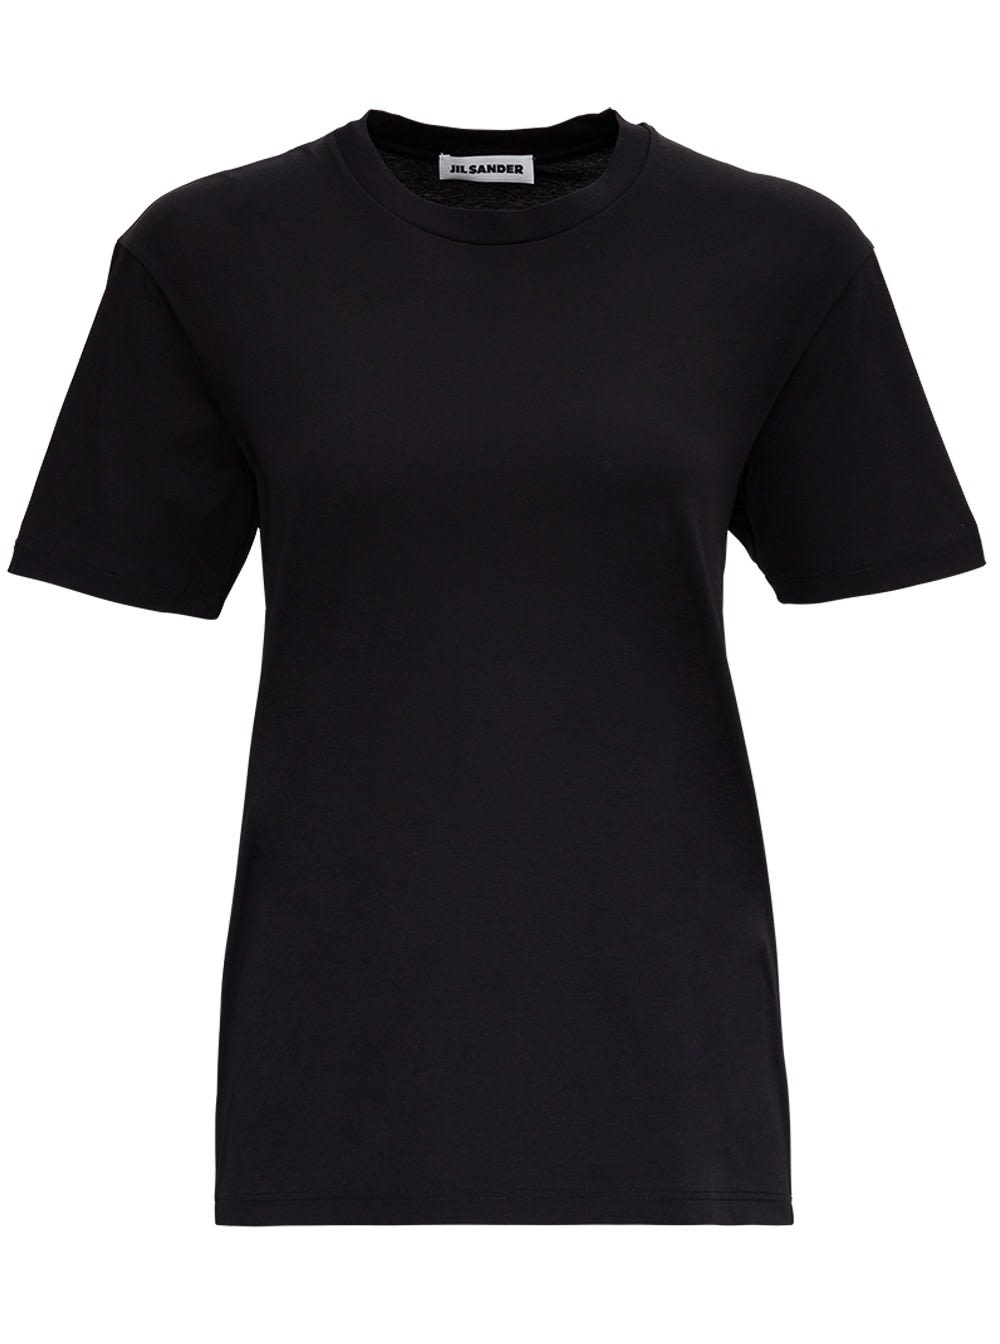 Jil Sander Black Jersey T-shirt